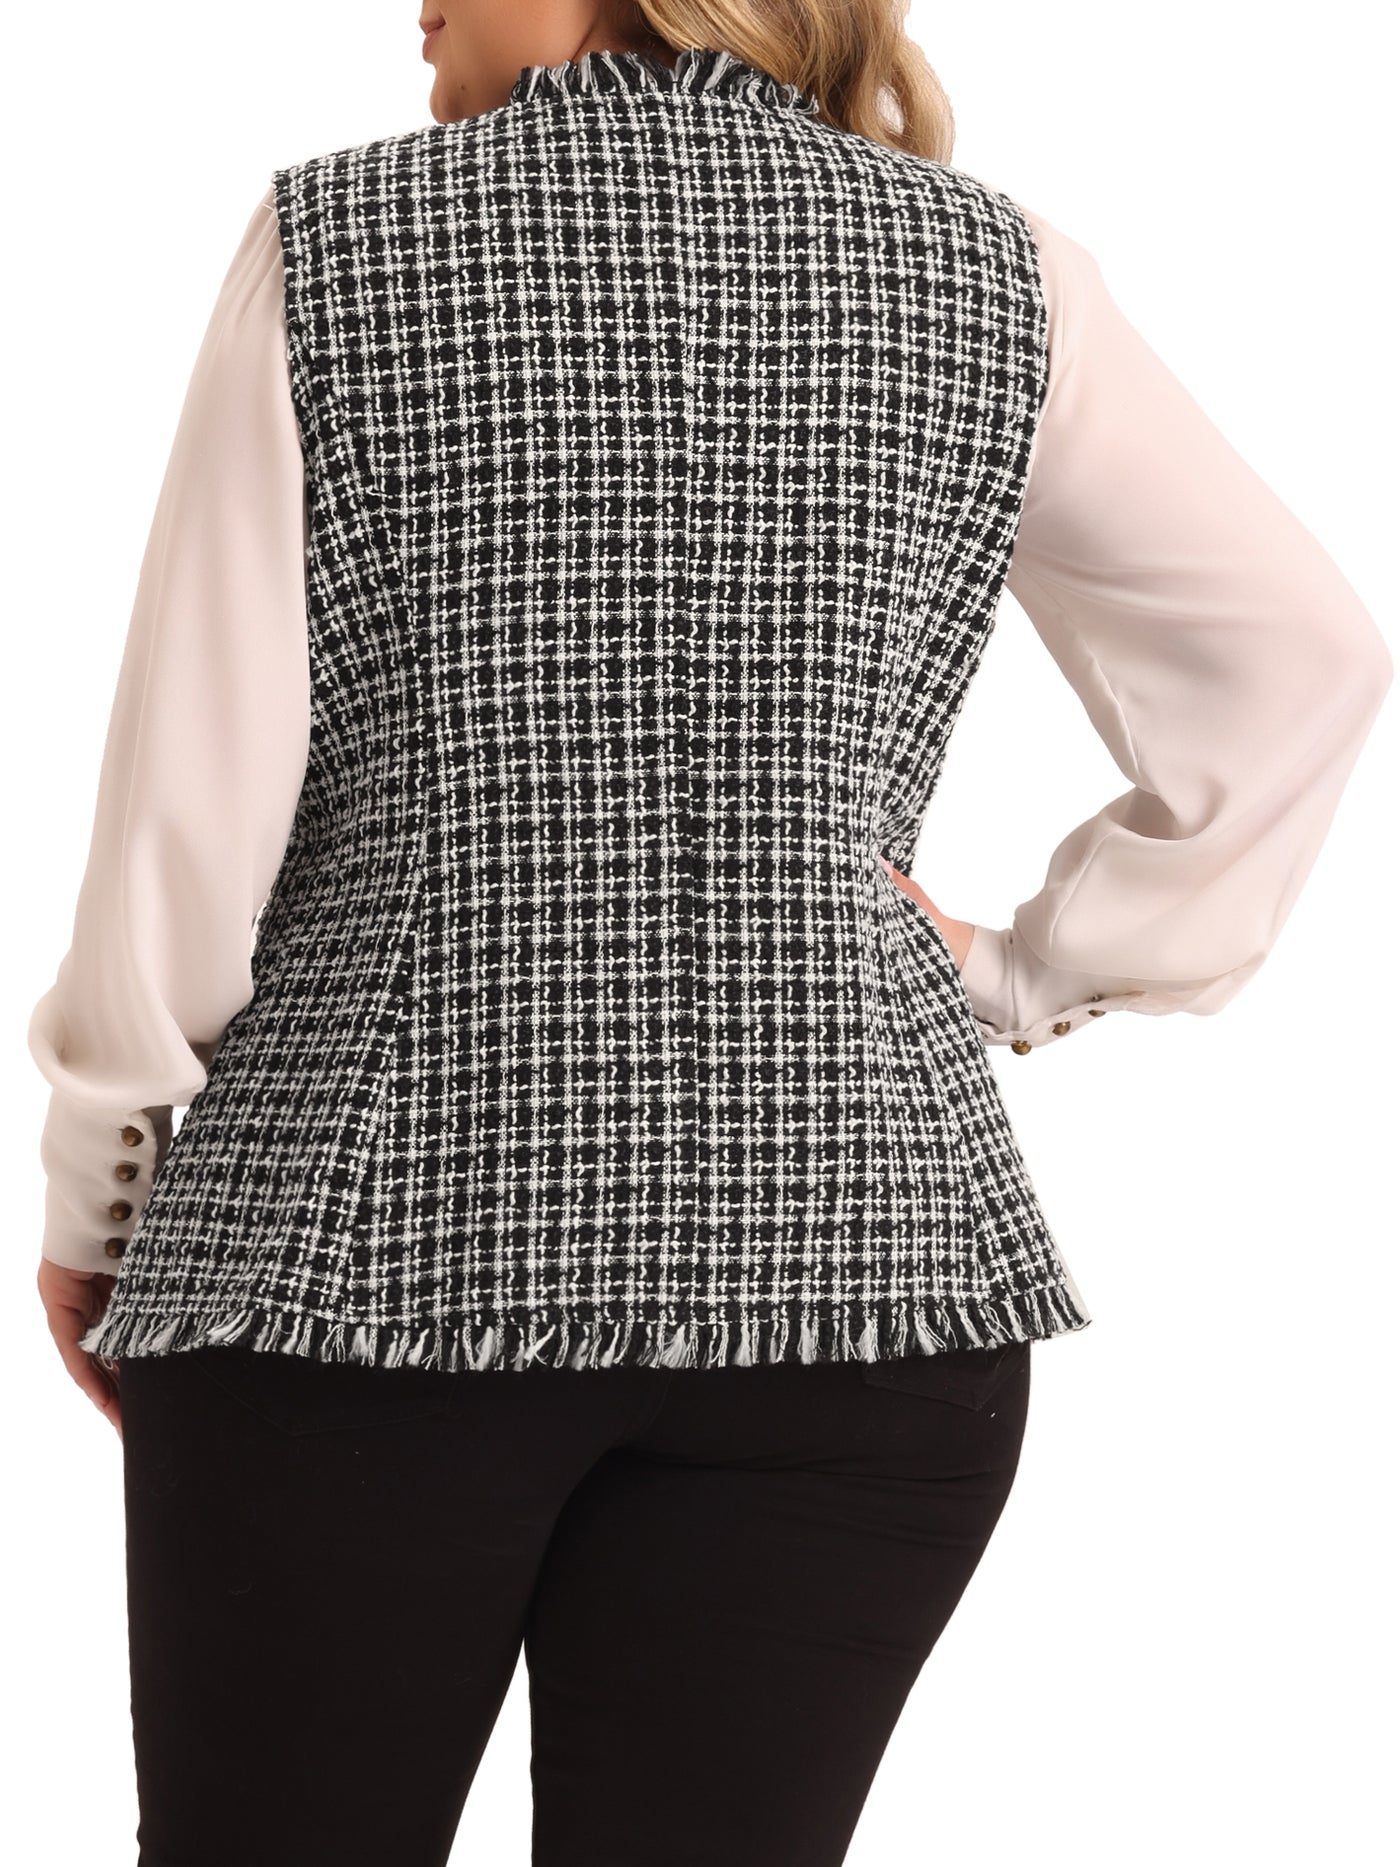 Bublédon Plus Size Vest for Women Plaid Button Open Front V Neck Sleeveless Blazer Jacket Outwear